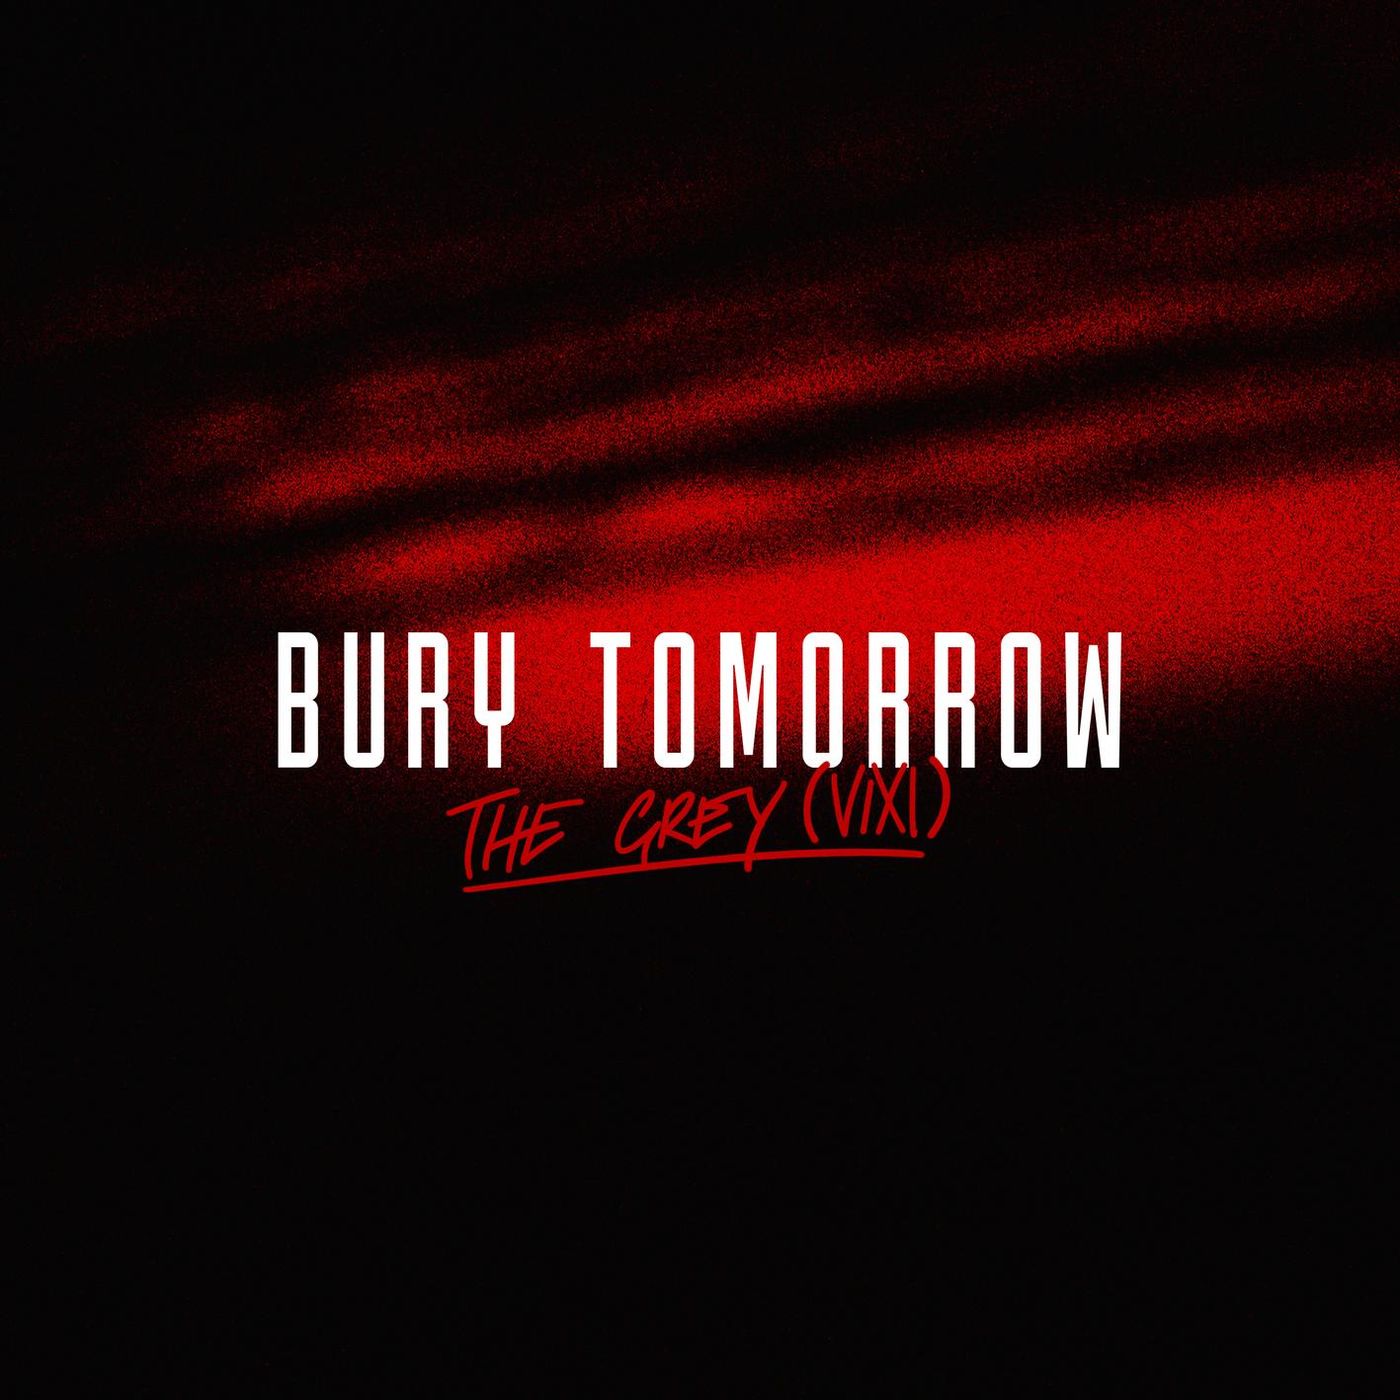 Bury Tomorrow - The Grey (VIXI) (Single) (2019)